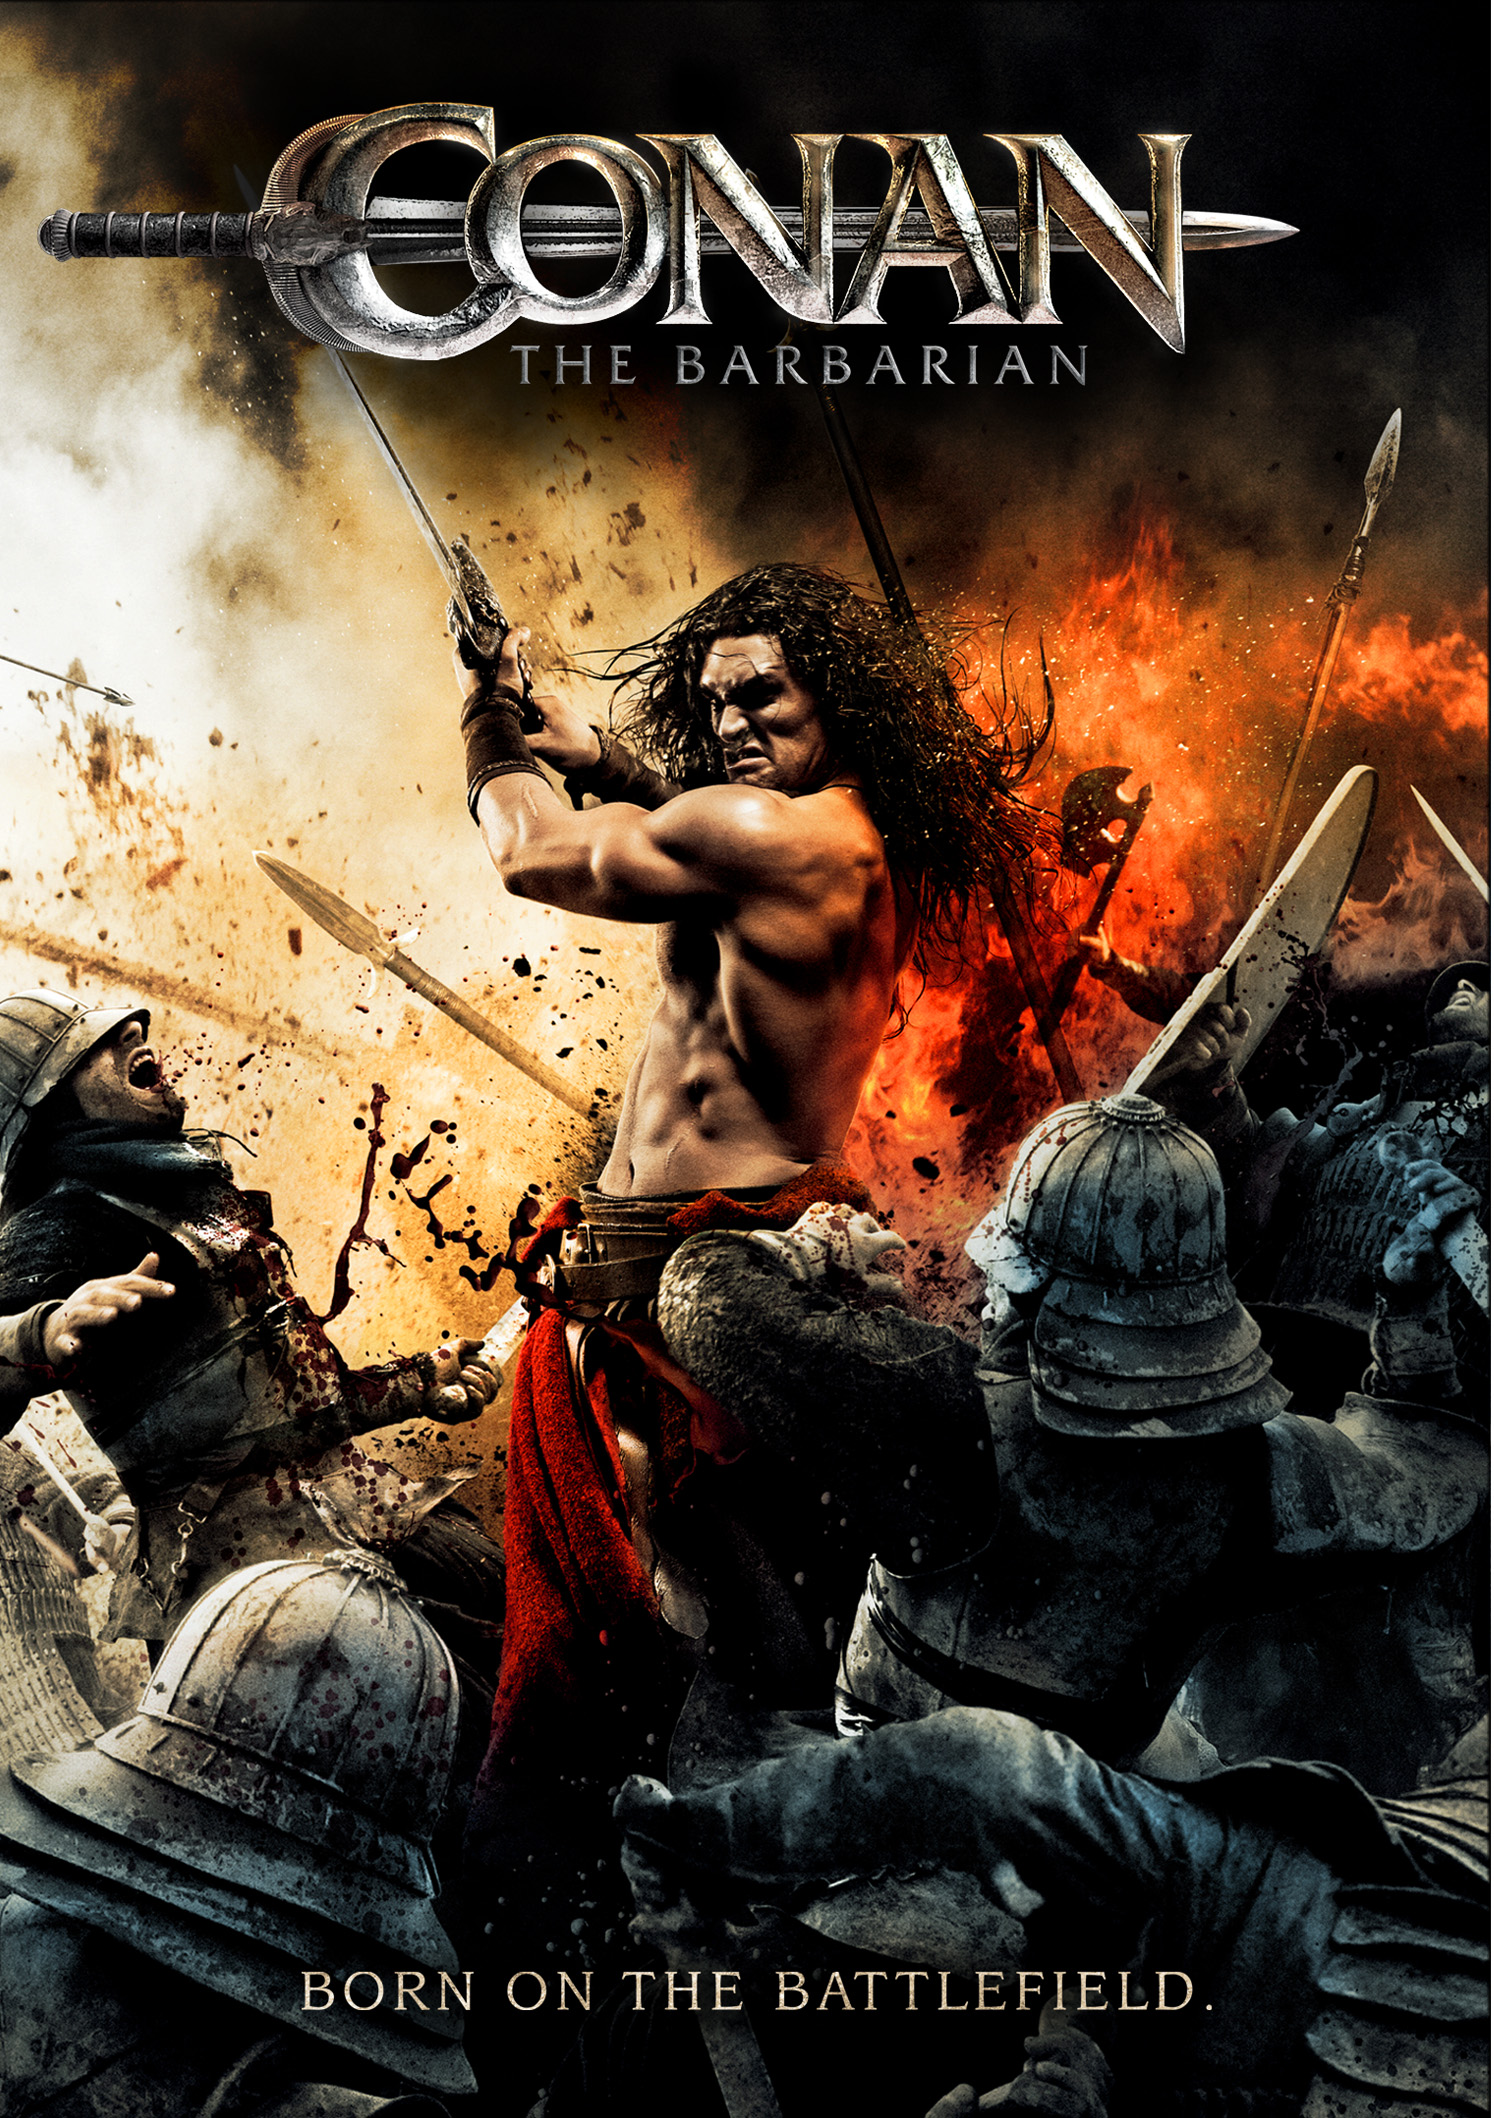 conan the barbarian movie cast 2011